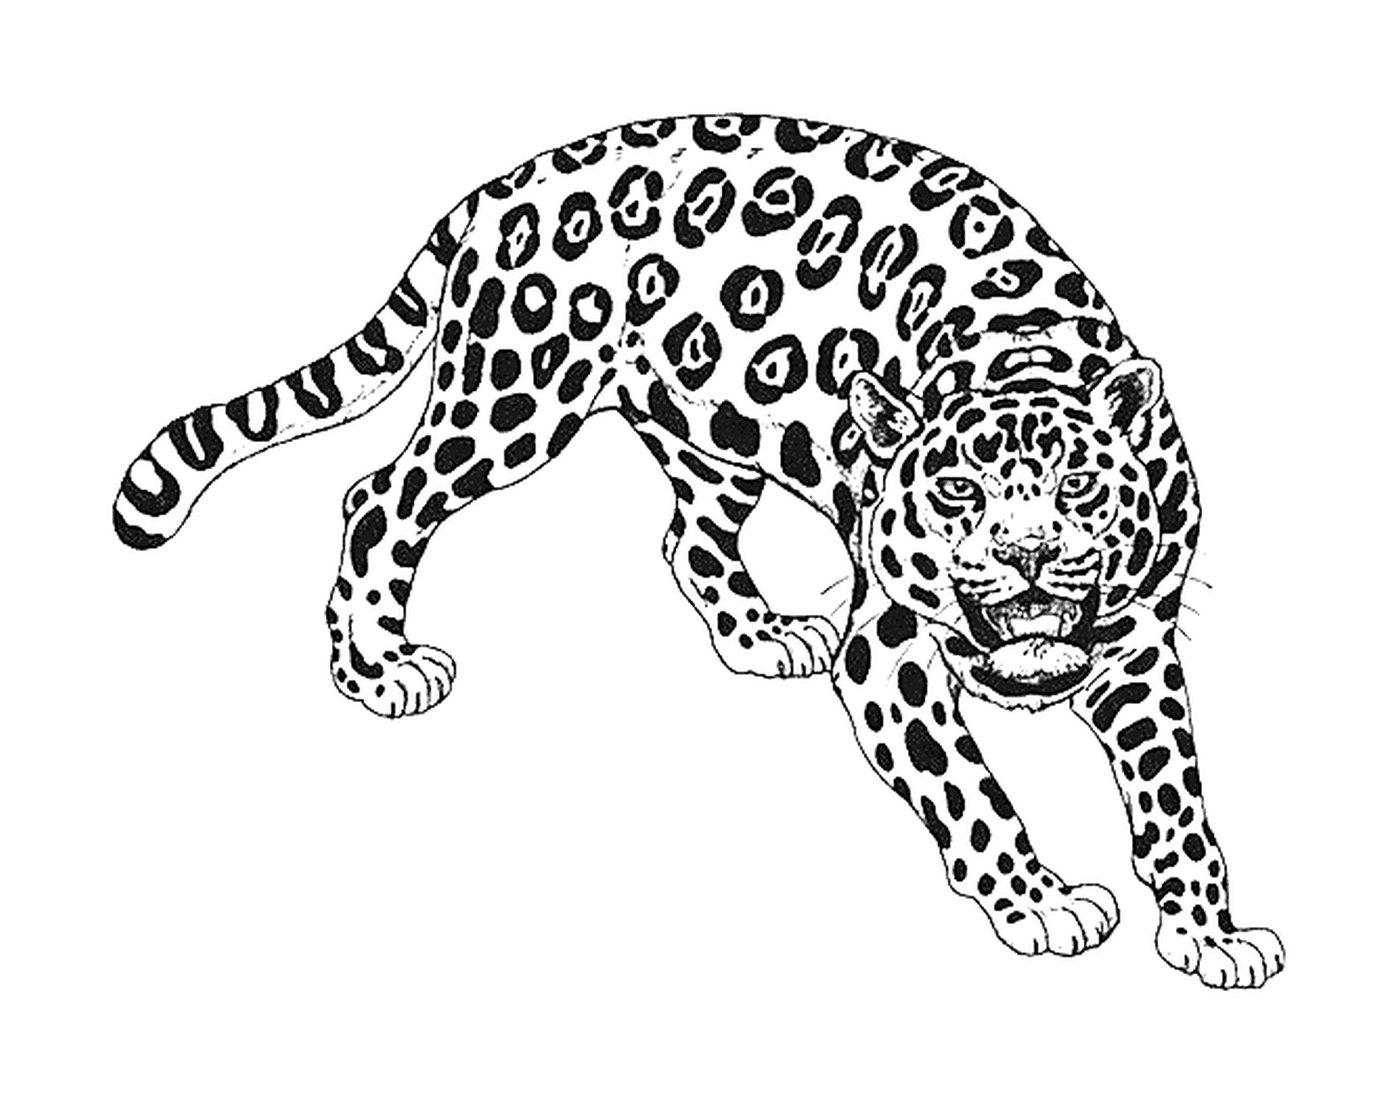  Un leopardo 